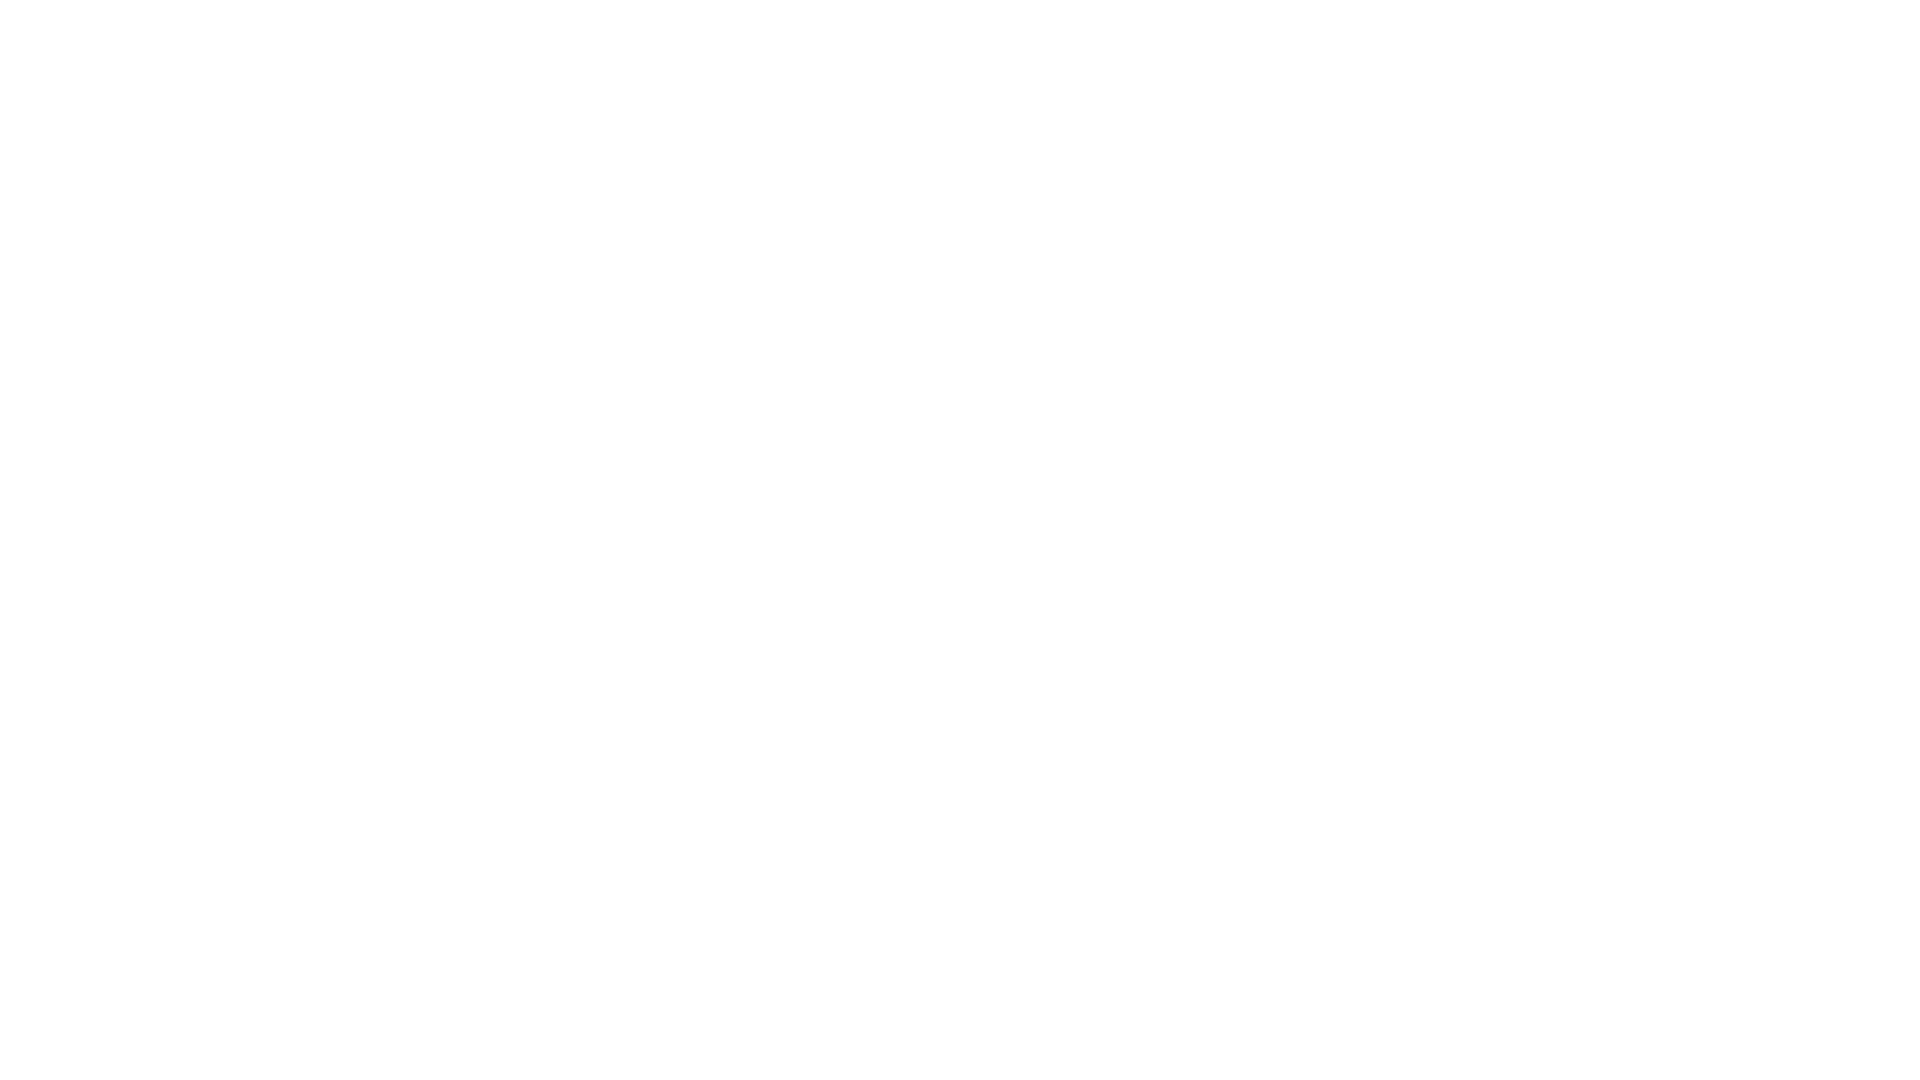 Syfy Logo - SYFY Fan Made Logo Videos: Open Call Project On Tongal.com